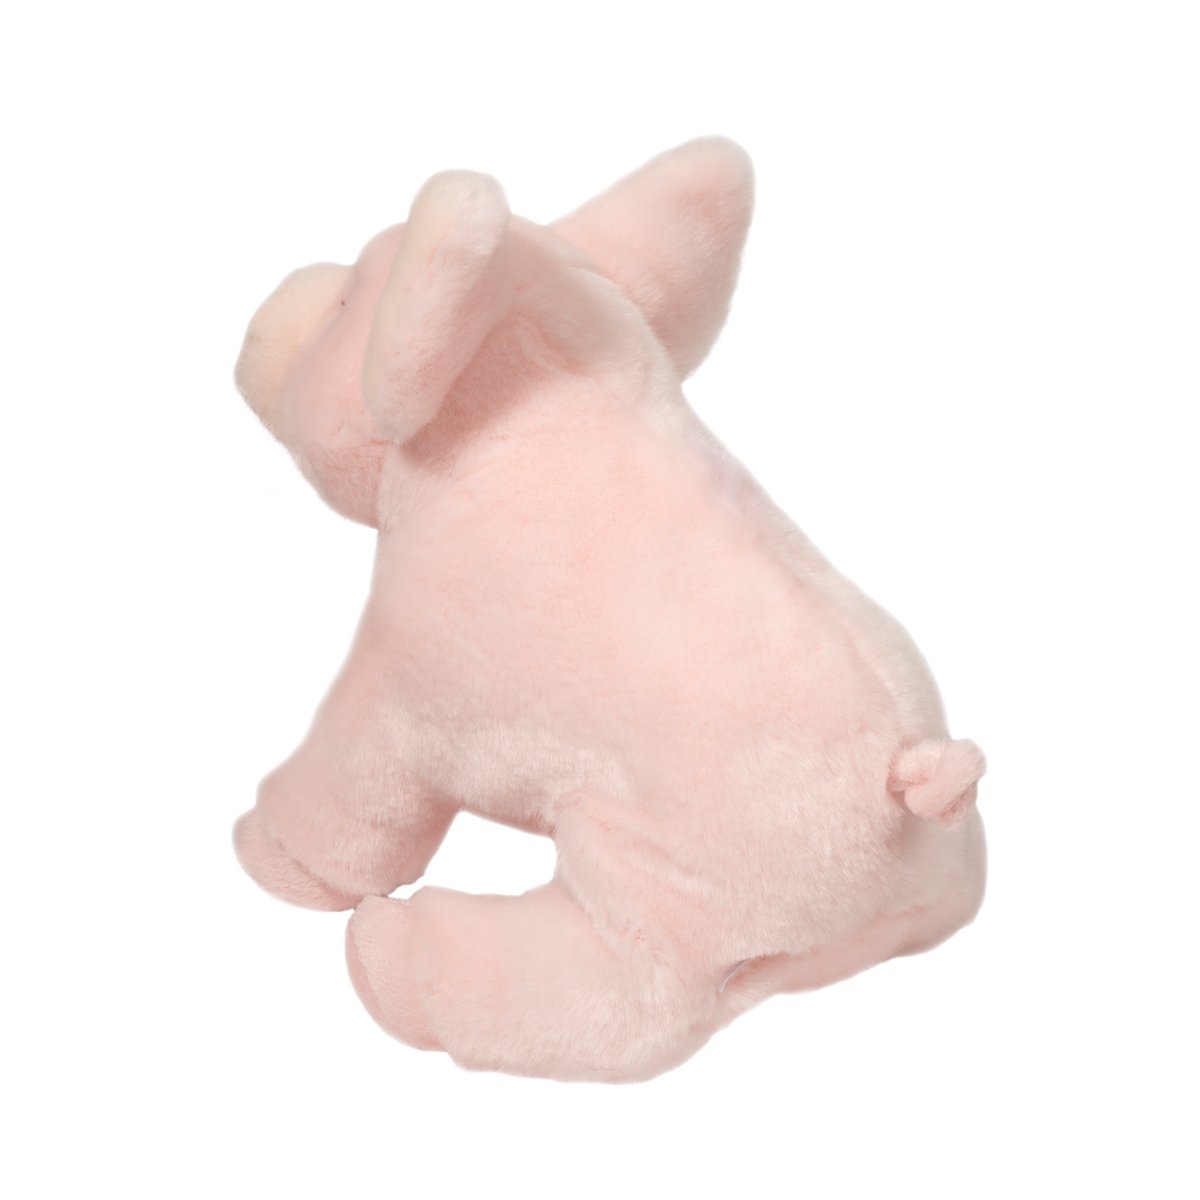 Douglas BETINA PINK PIG Piglet Plush Toy Stuffed Animal 10” Soft Kids Cuddle Toy 